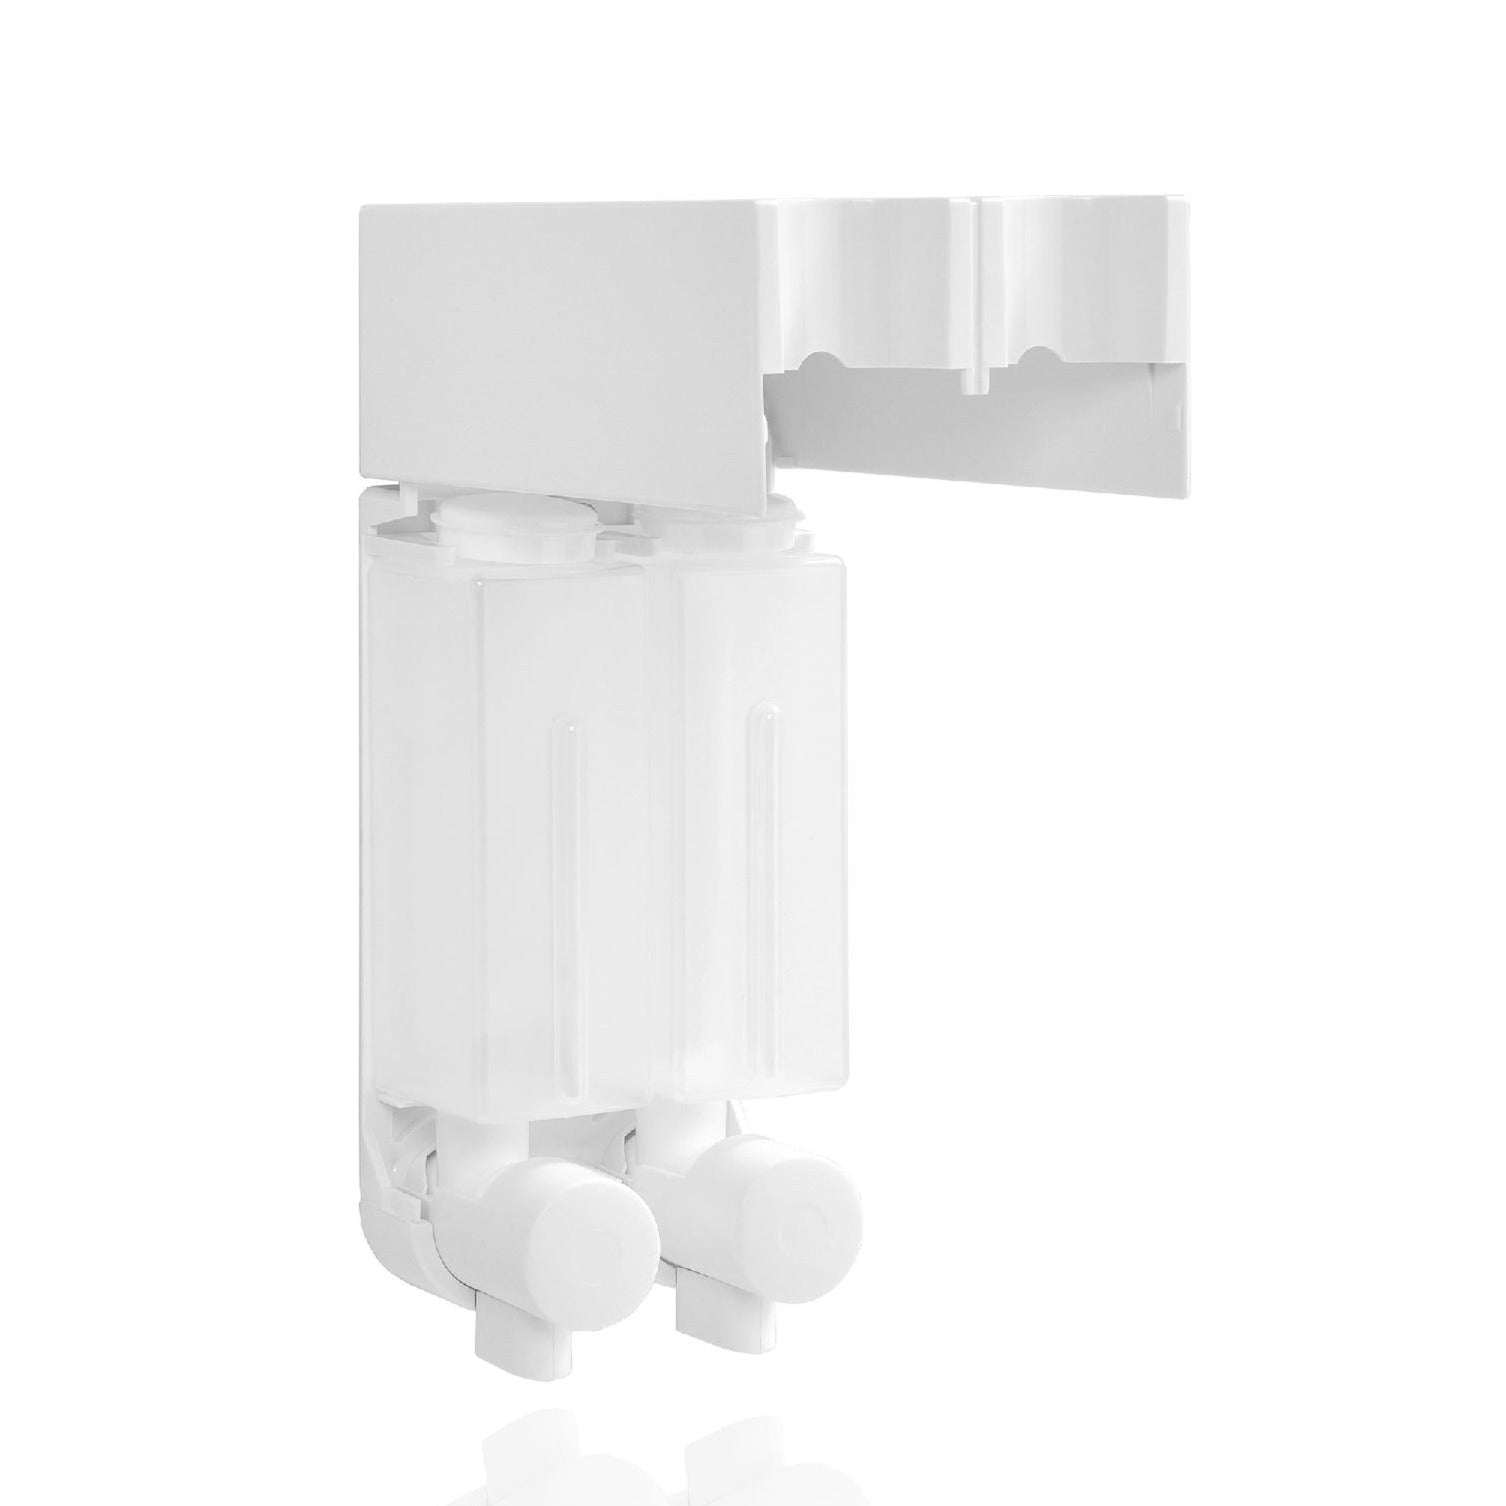 Double PVC Wall Soap Dispenser